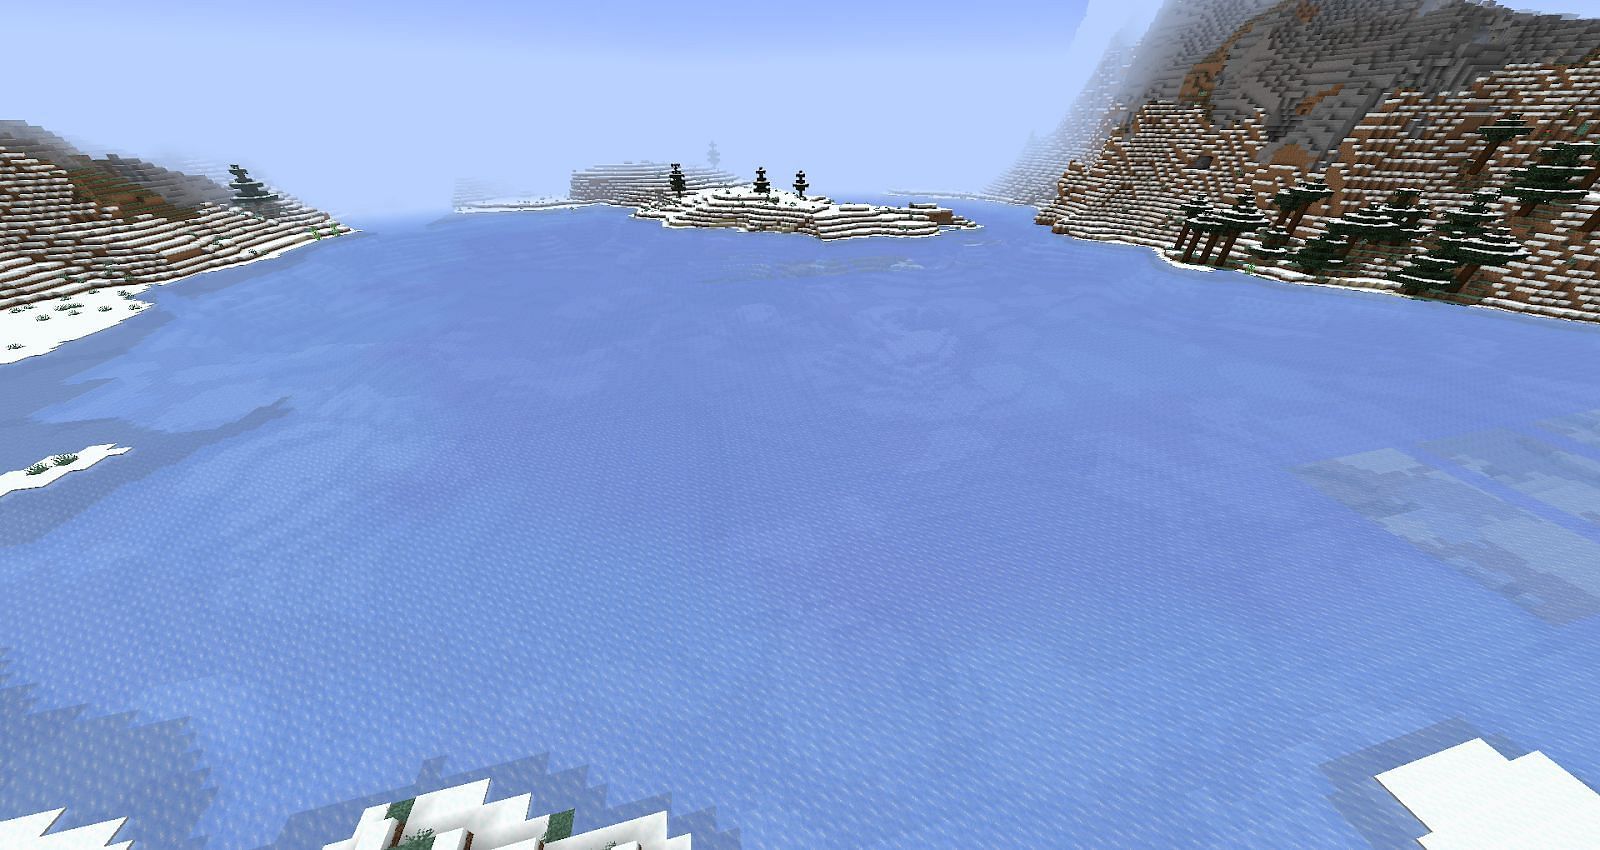 A frozen lake in Minecraft 1.18 (Image via u/Rienti on Reddit)